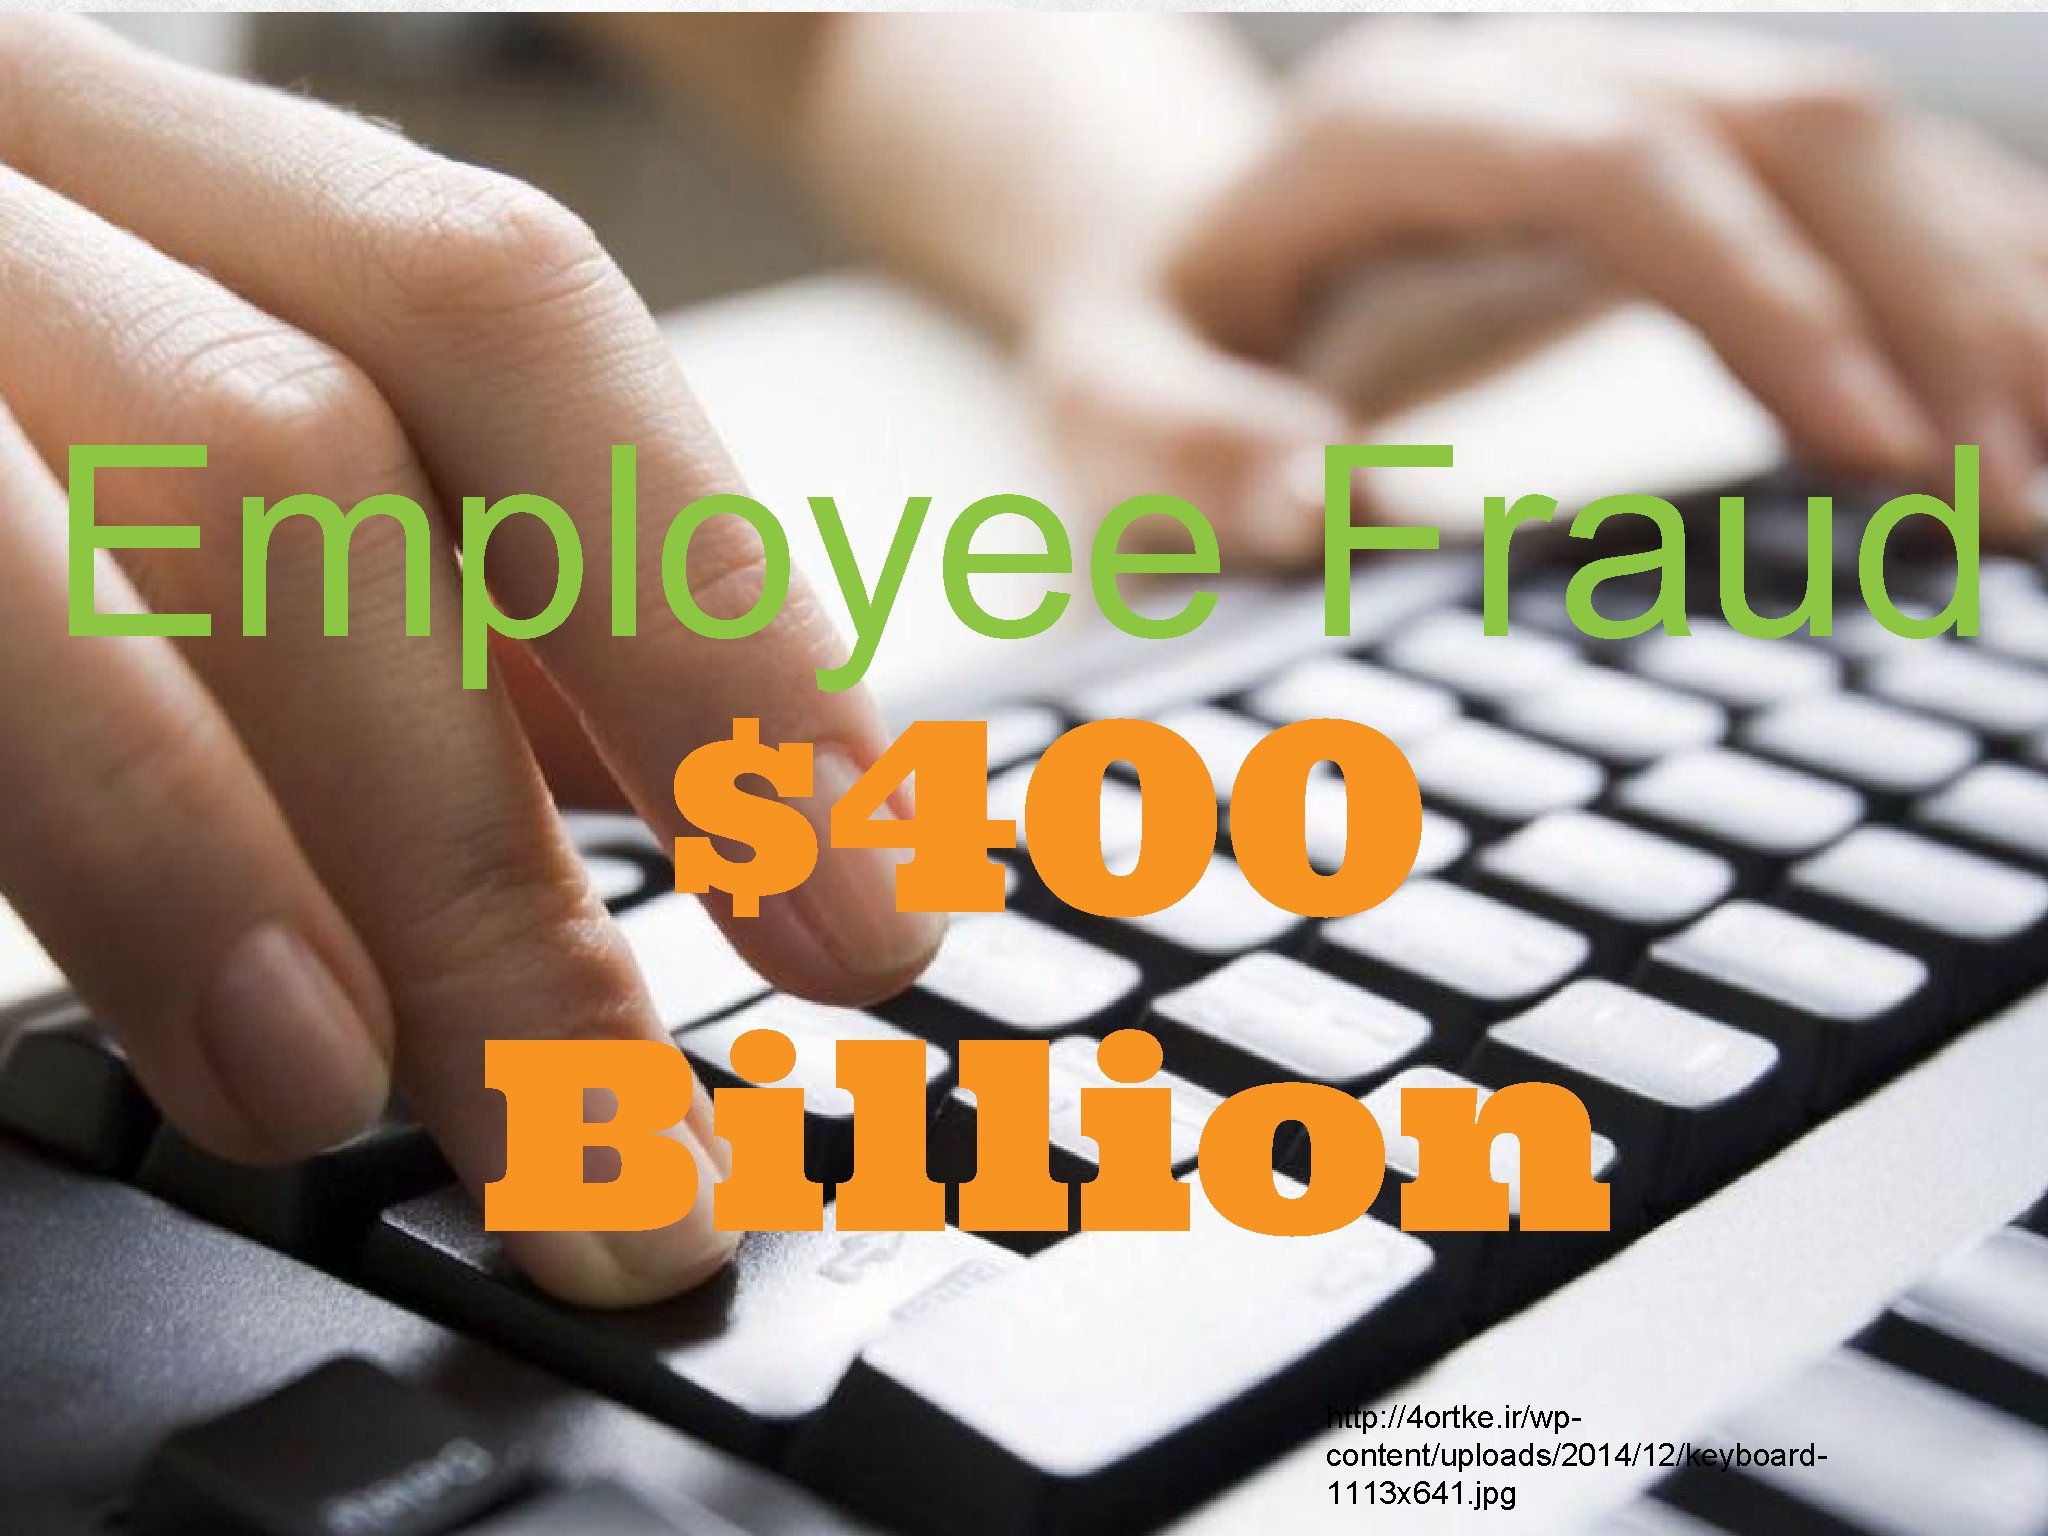 Employee Fraud $400 Billion http: //4 ortke. ir/wpcontent/uploads/2014/12/keyboard 1113 x 641. jpg 